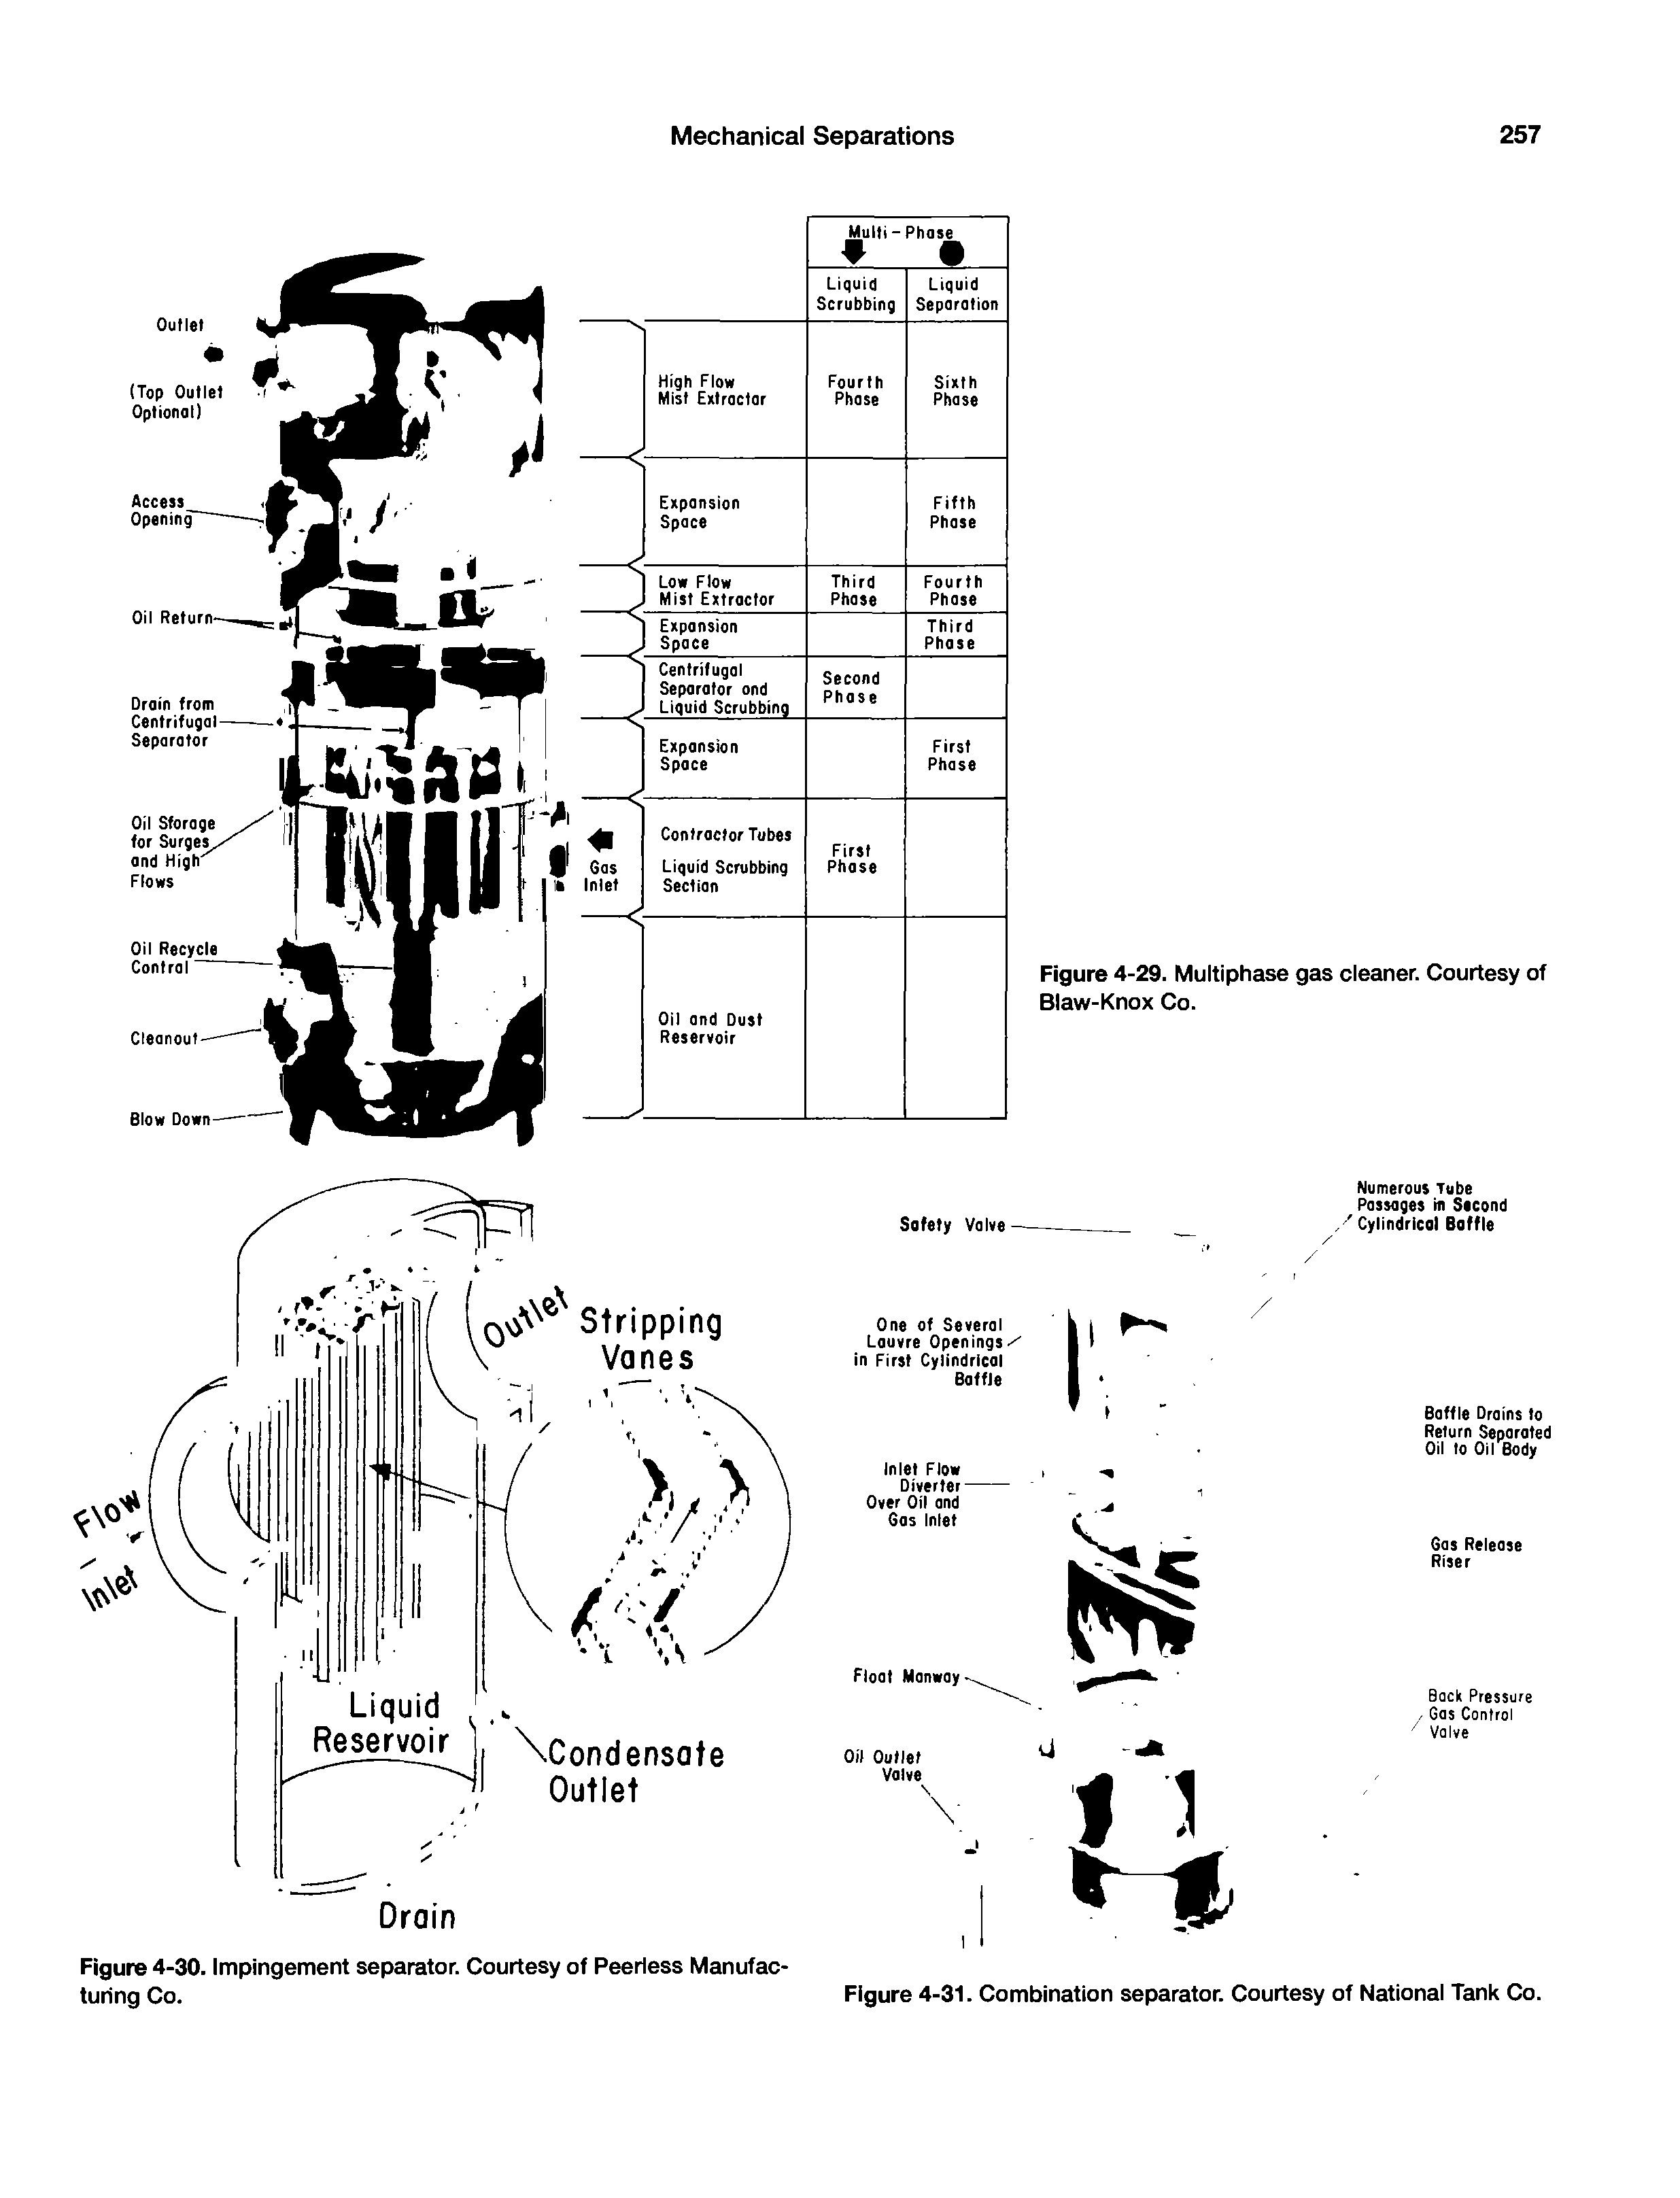 Figure 4-30. Impingement separator. Courtesy of Peerless Manufacturing Co.